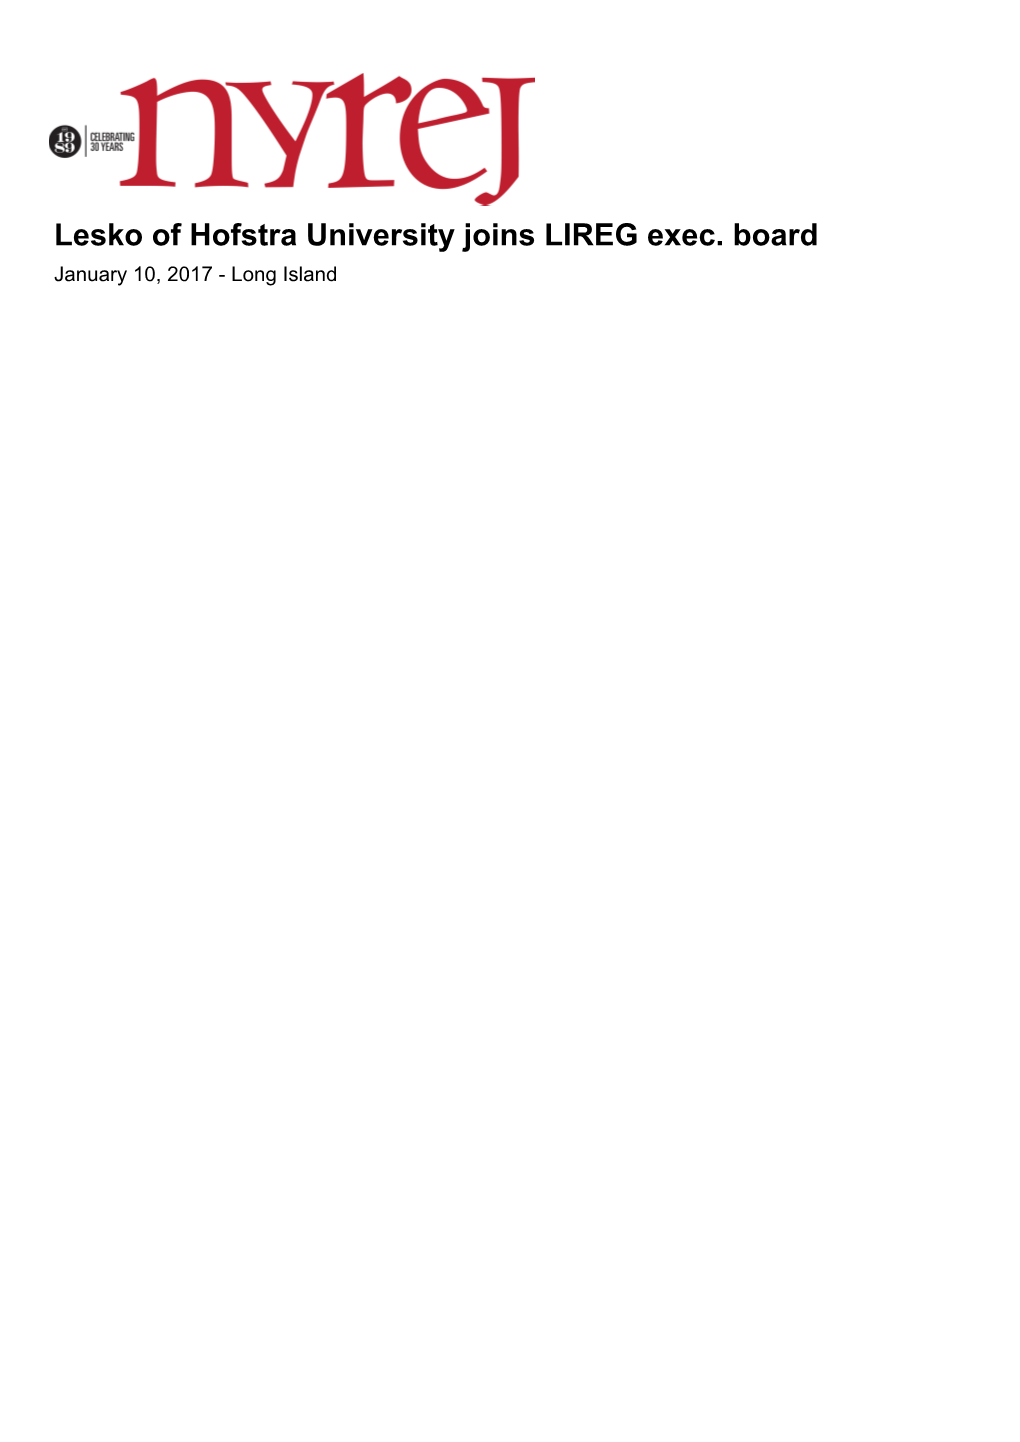 Lesko of Hofstra University Joins LIREG Exec. Board